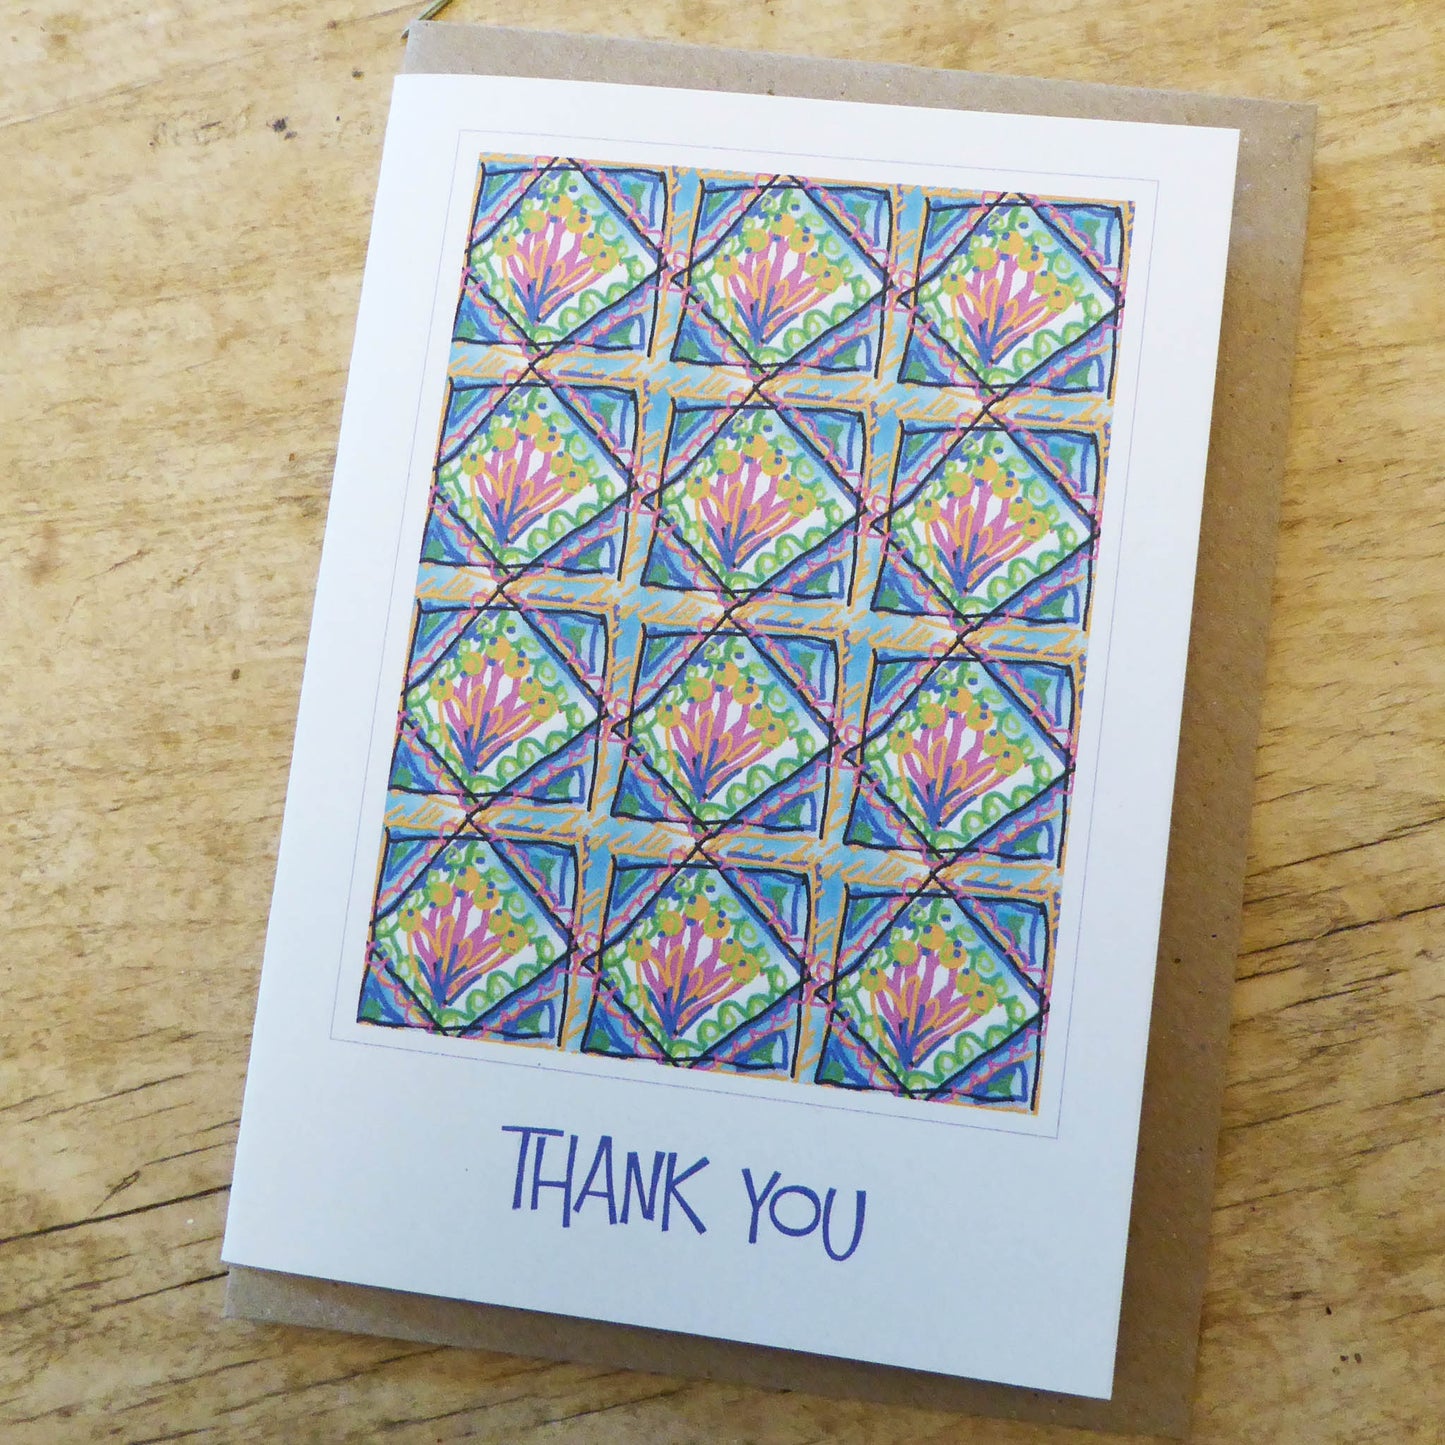 Single Greetings Card - Thank you - Recycled - Handmade - by Norfolk based artist Debbie Osborn